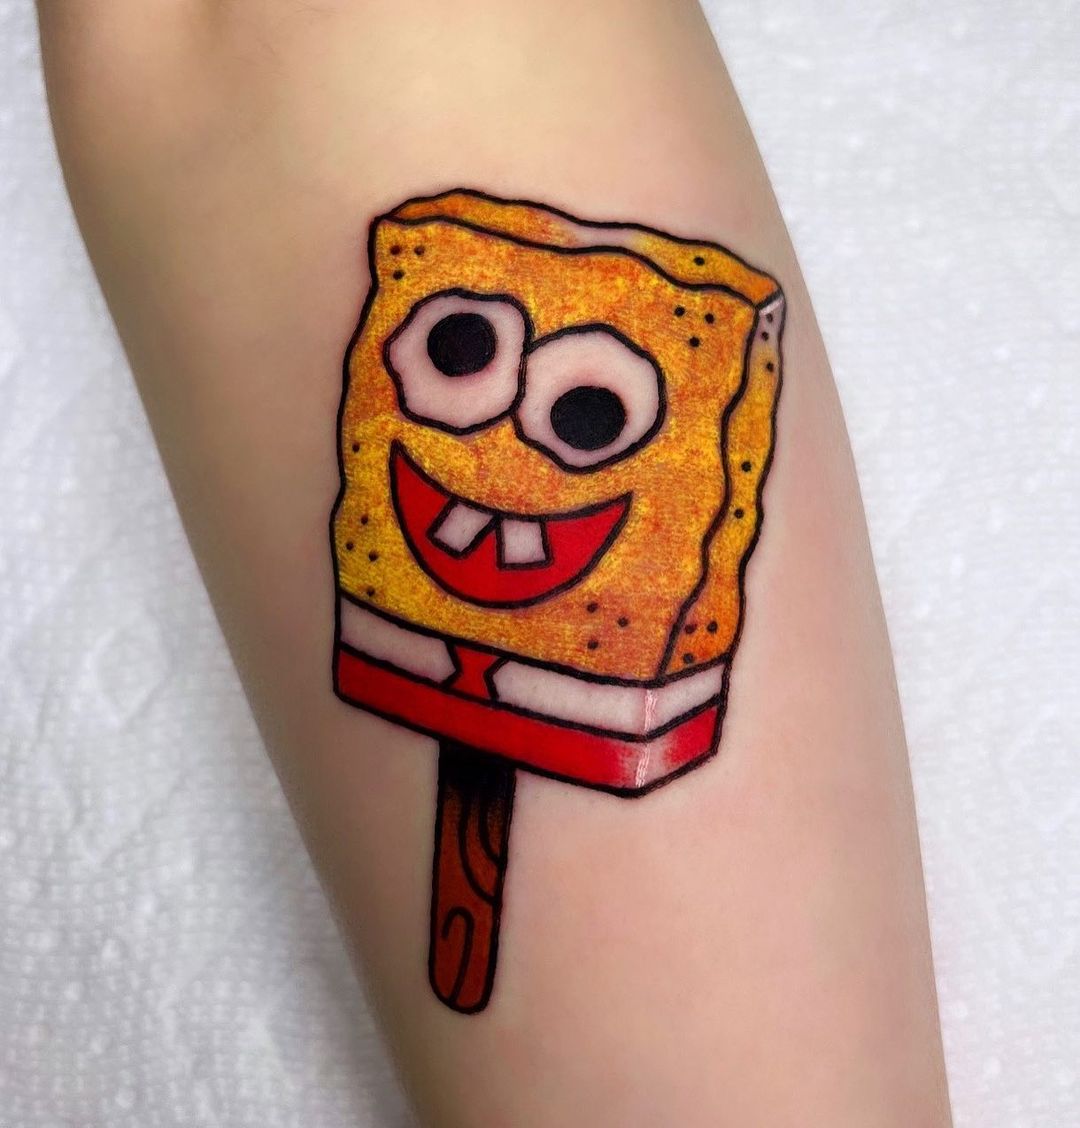 Sponge Bob Tattoo As An Ice Cream